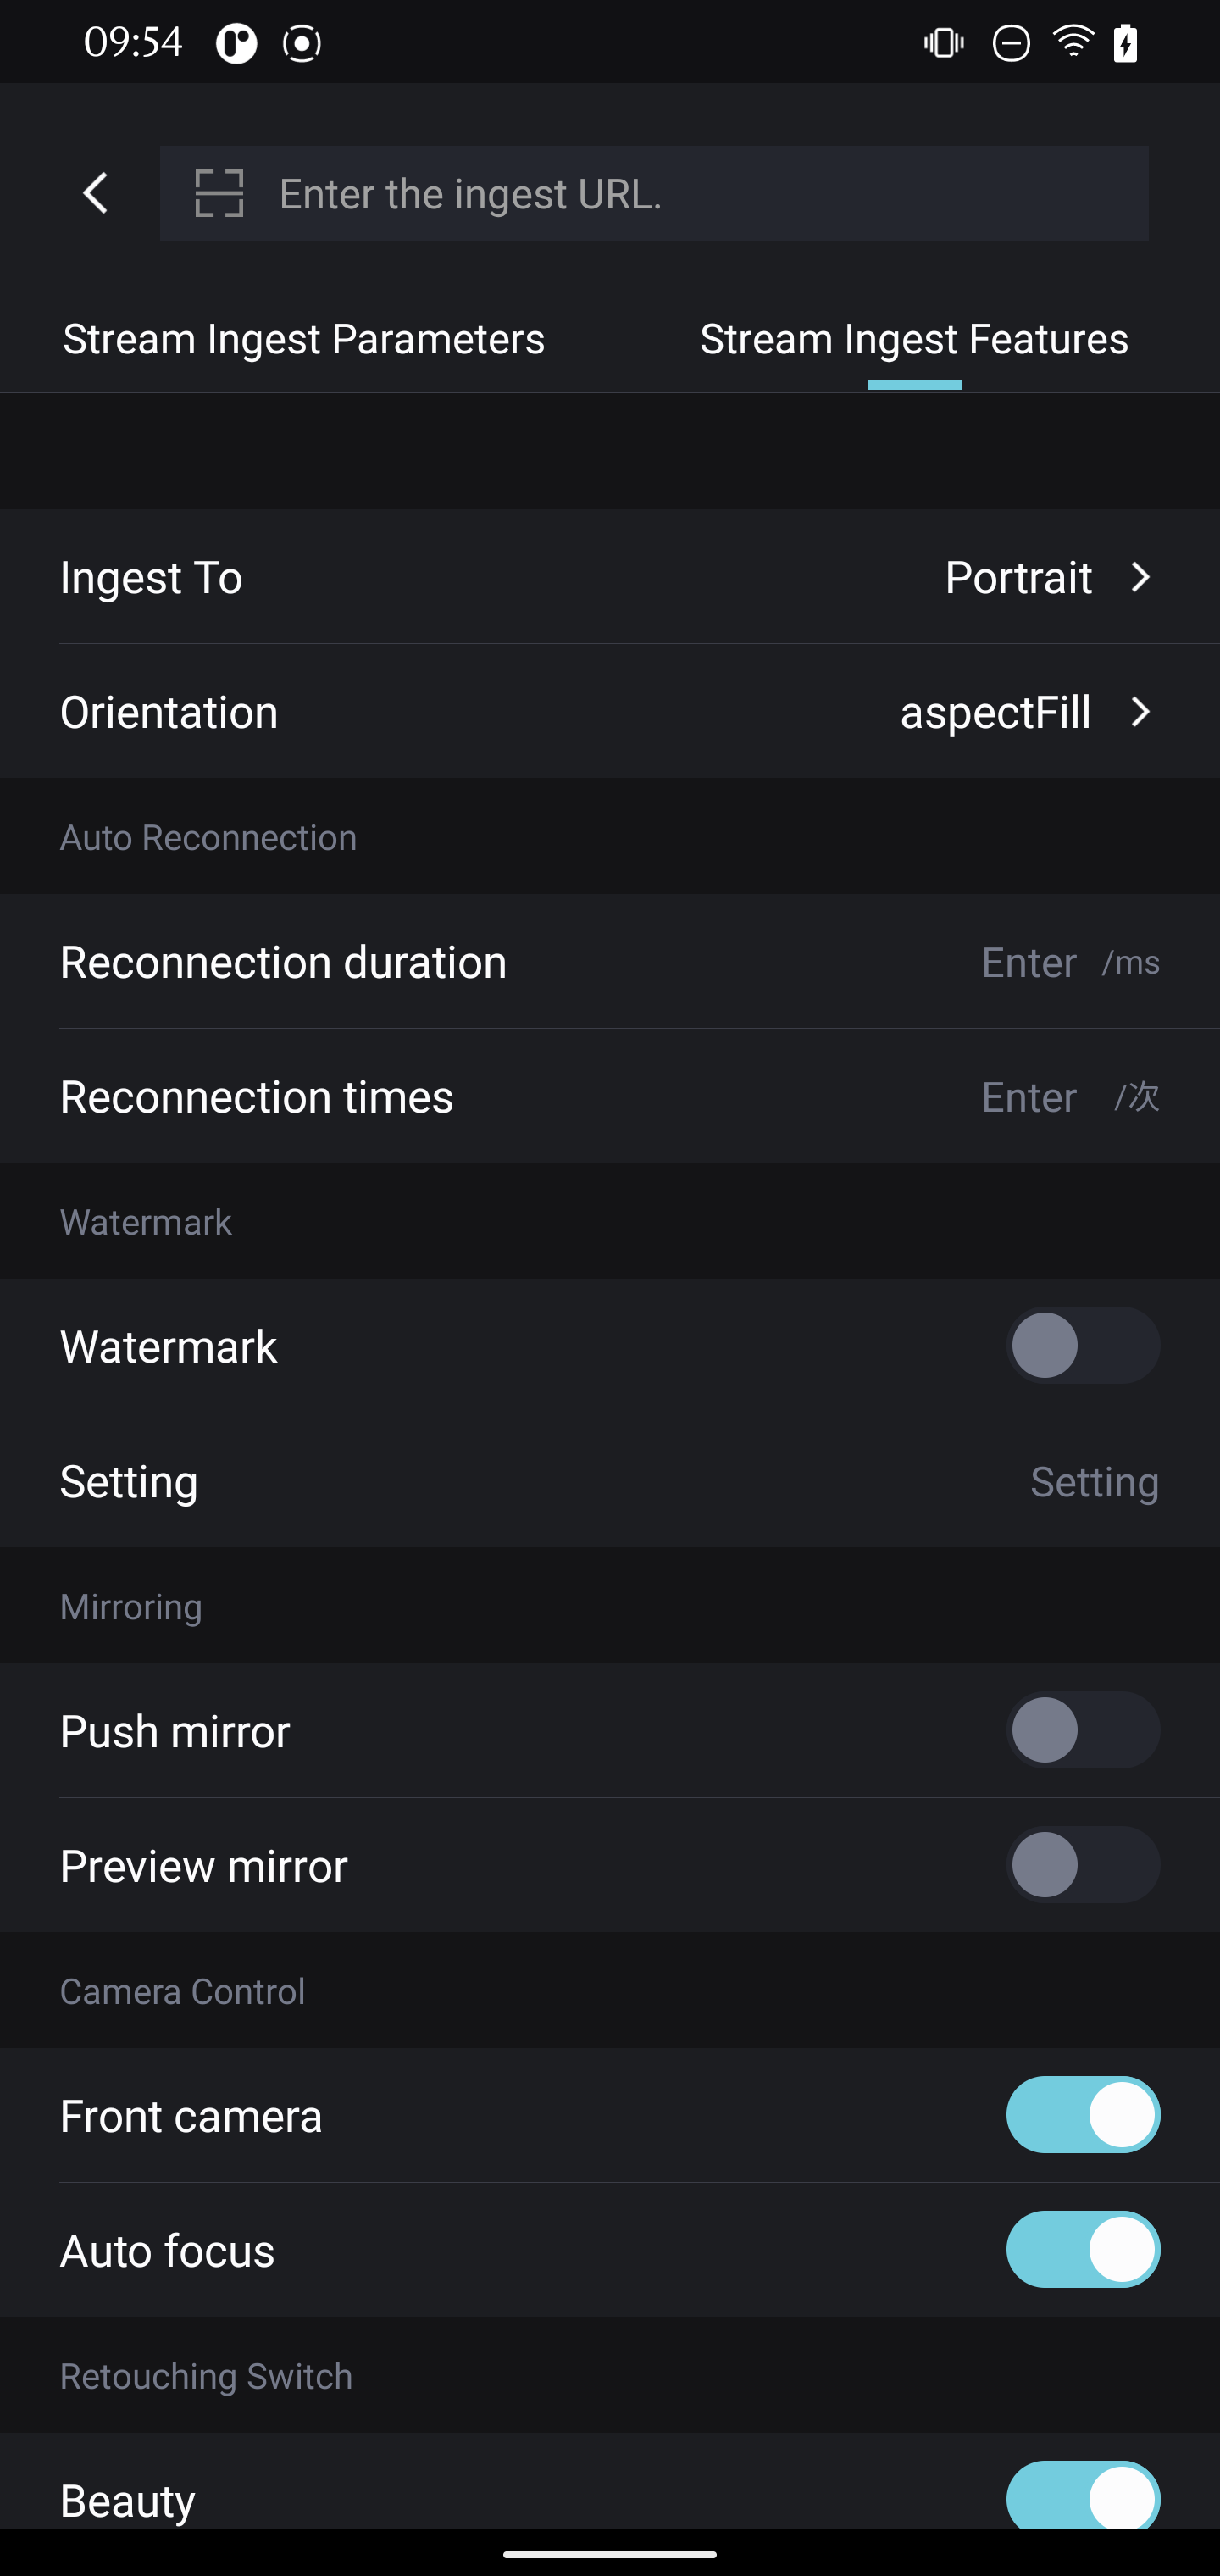 Stream ingest settings - Feature settings